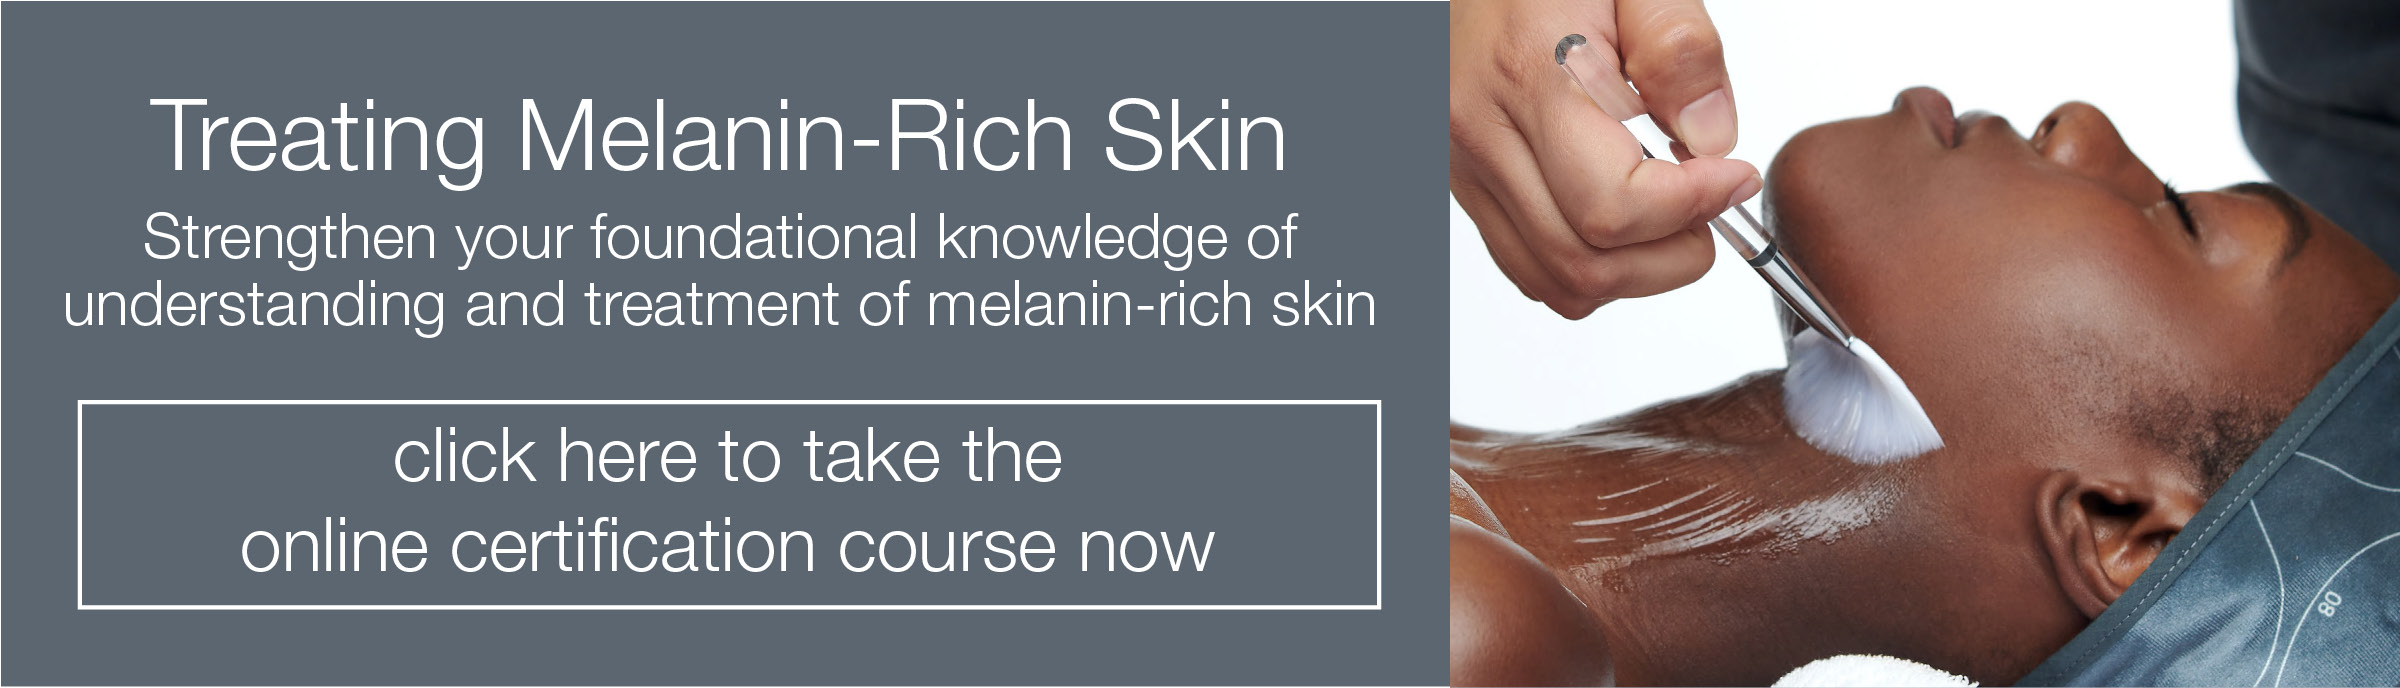 <p>
	Treating Melanin-Rich Skin</p>